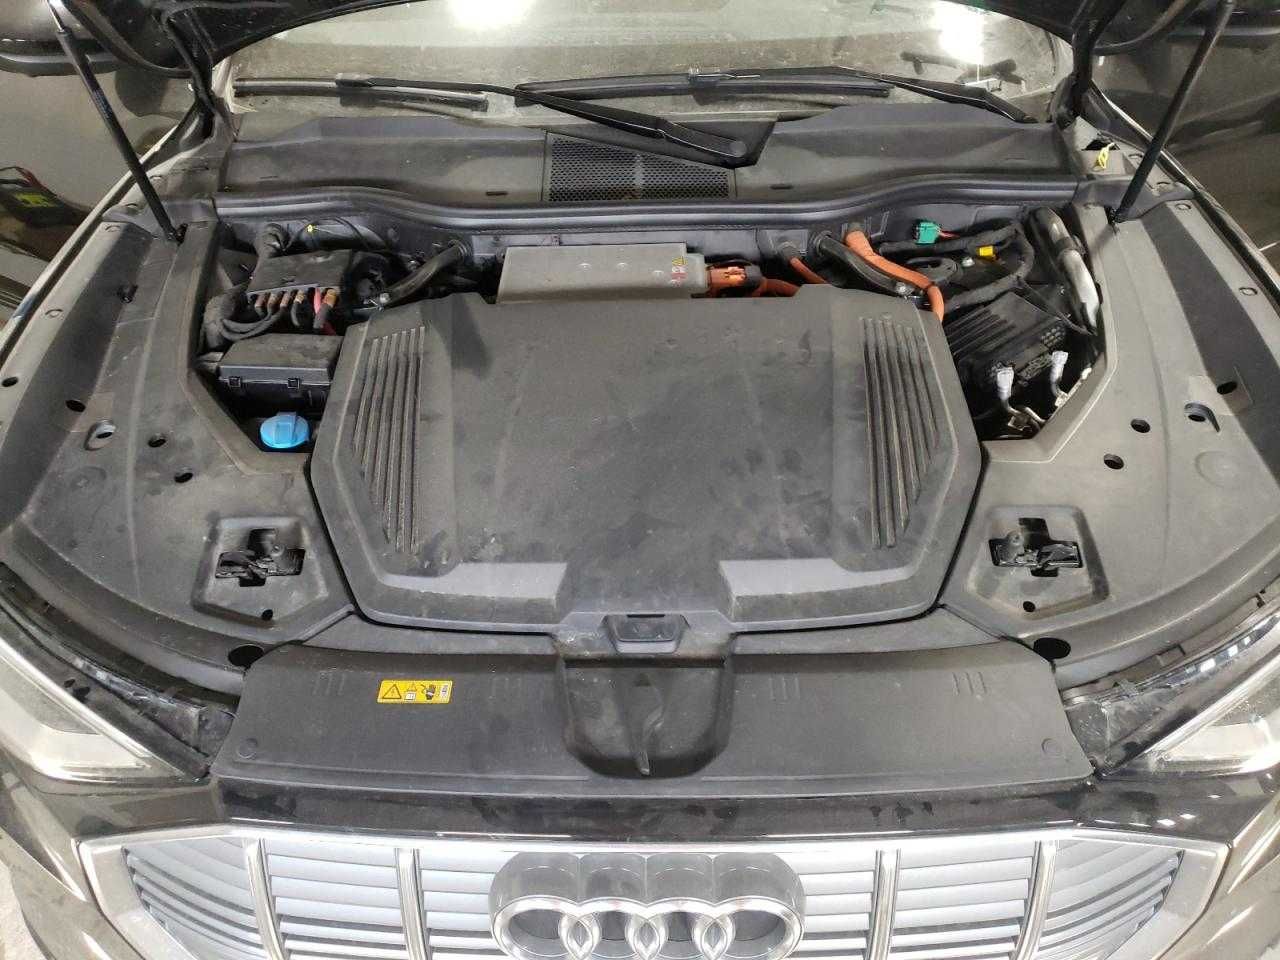 Audi E-tron Premium Plus 2021